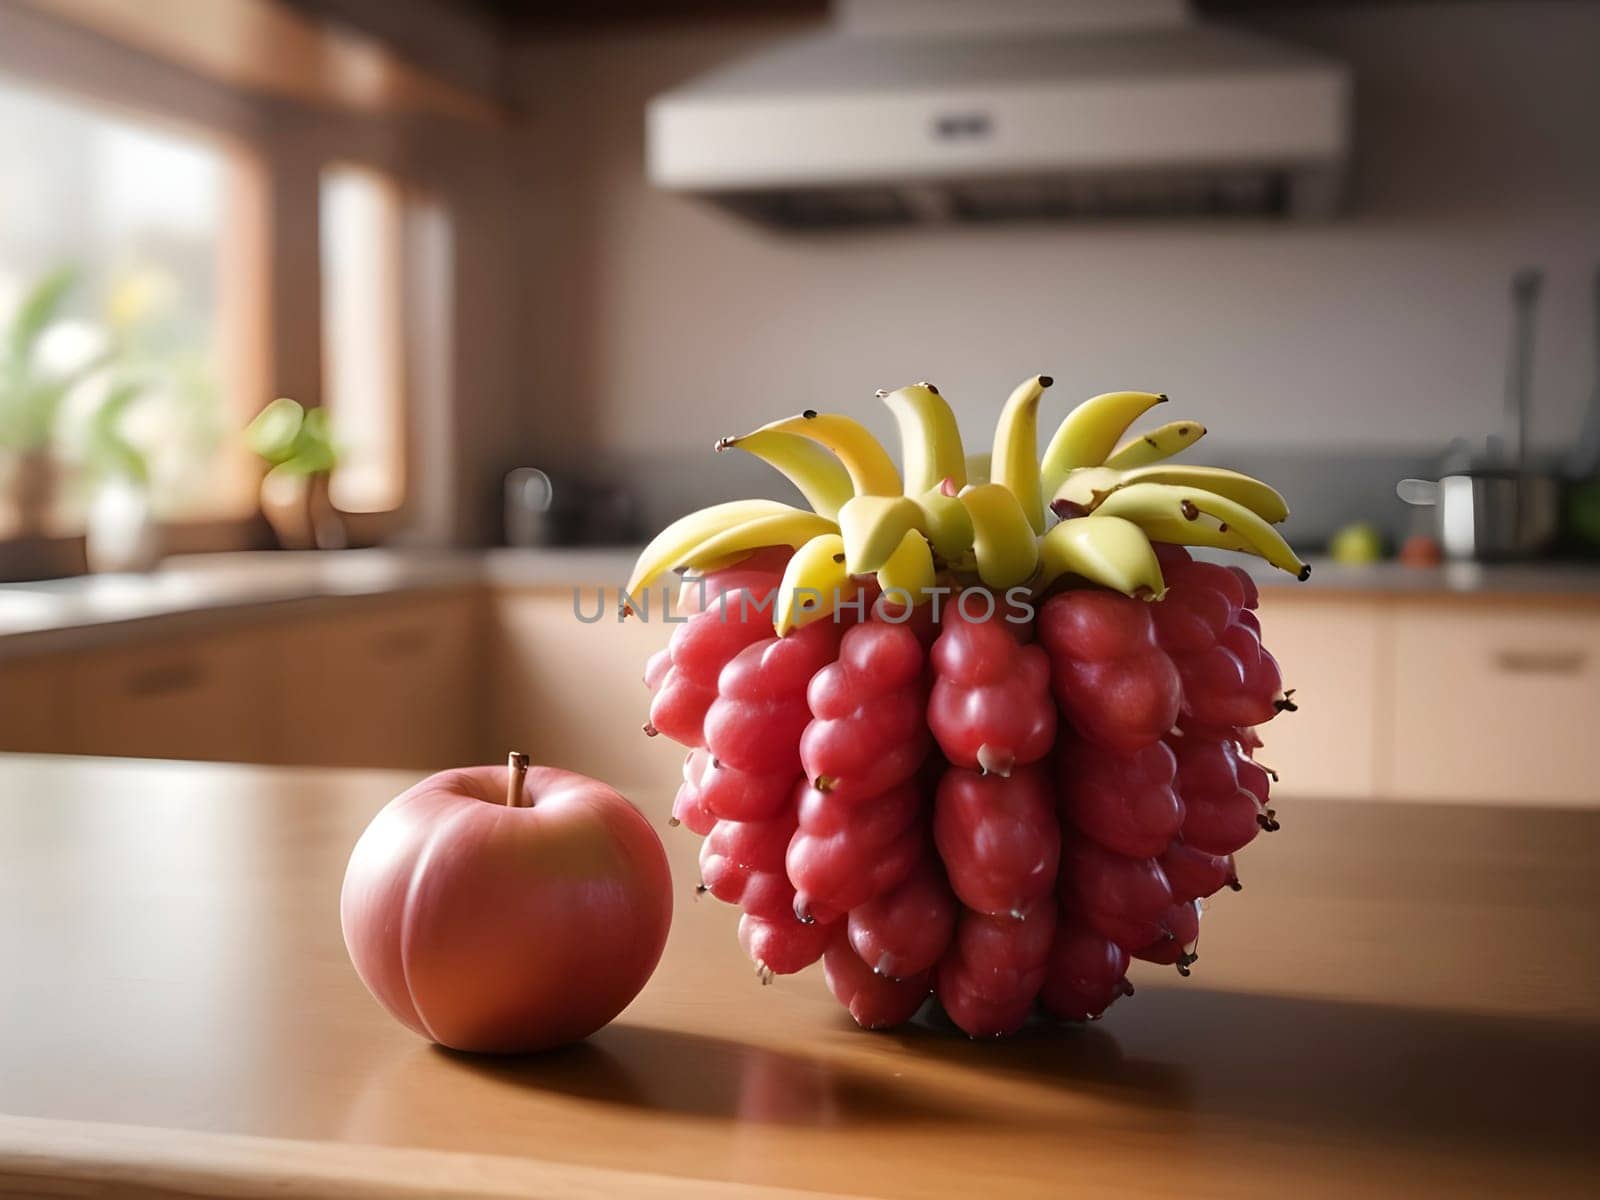 Golden Hour Elegance: Longkong Fruit Centerpiece in a Cozy, Sunlit Kitchen by mailos